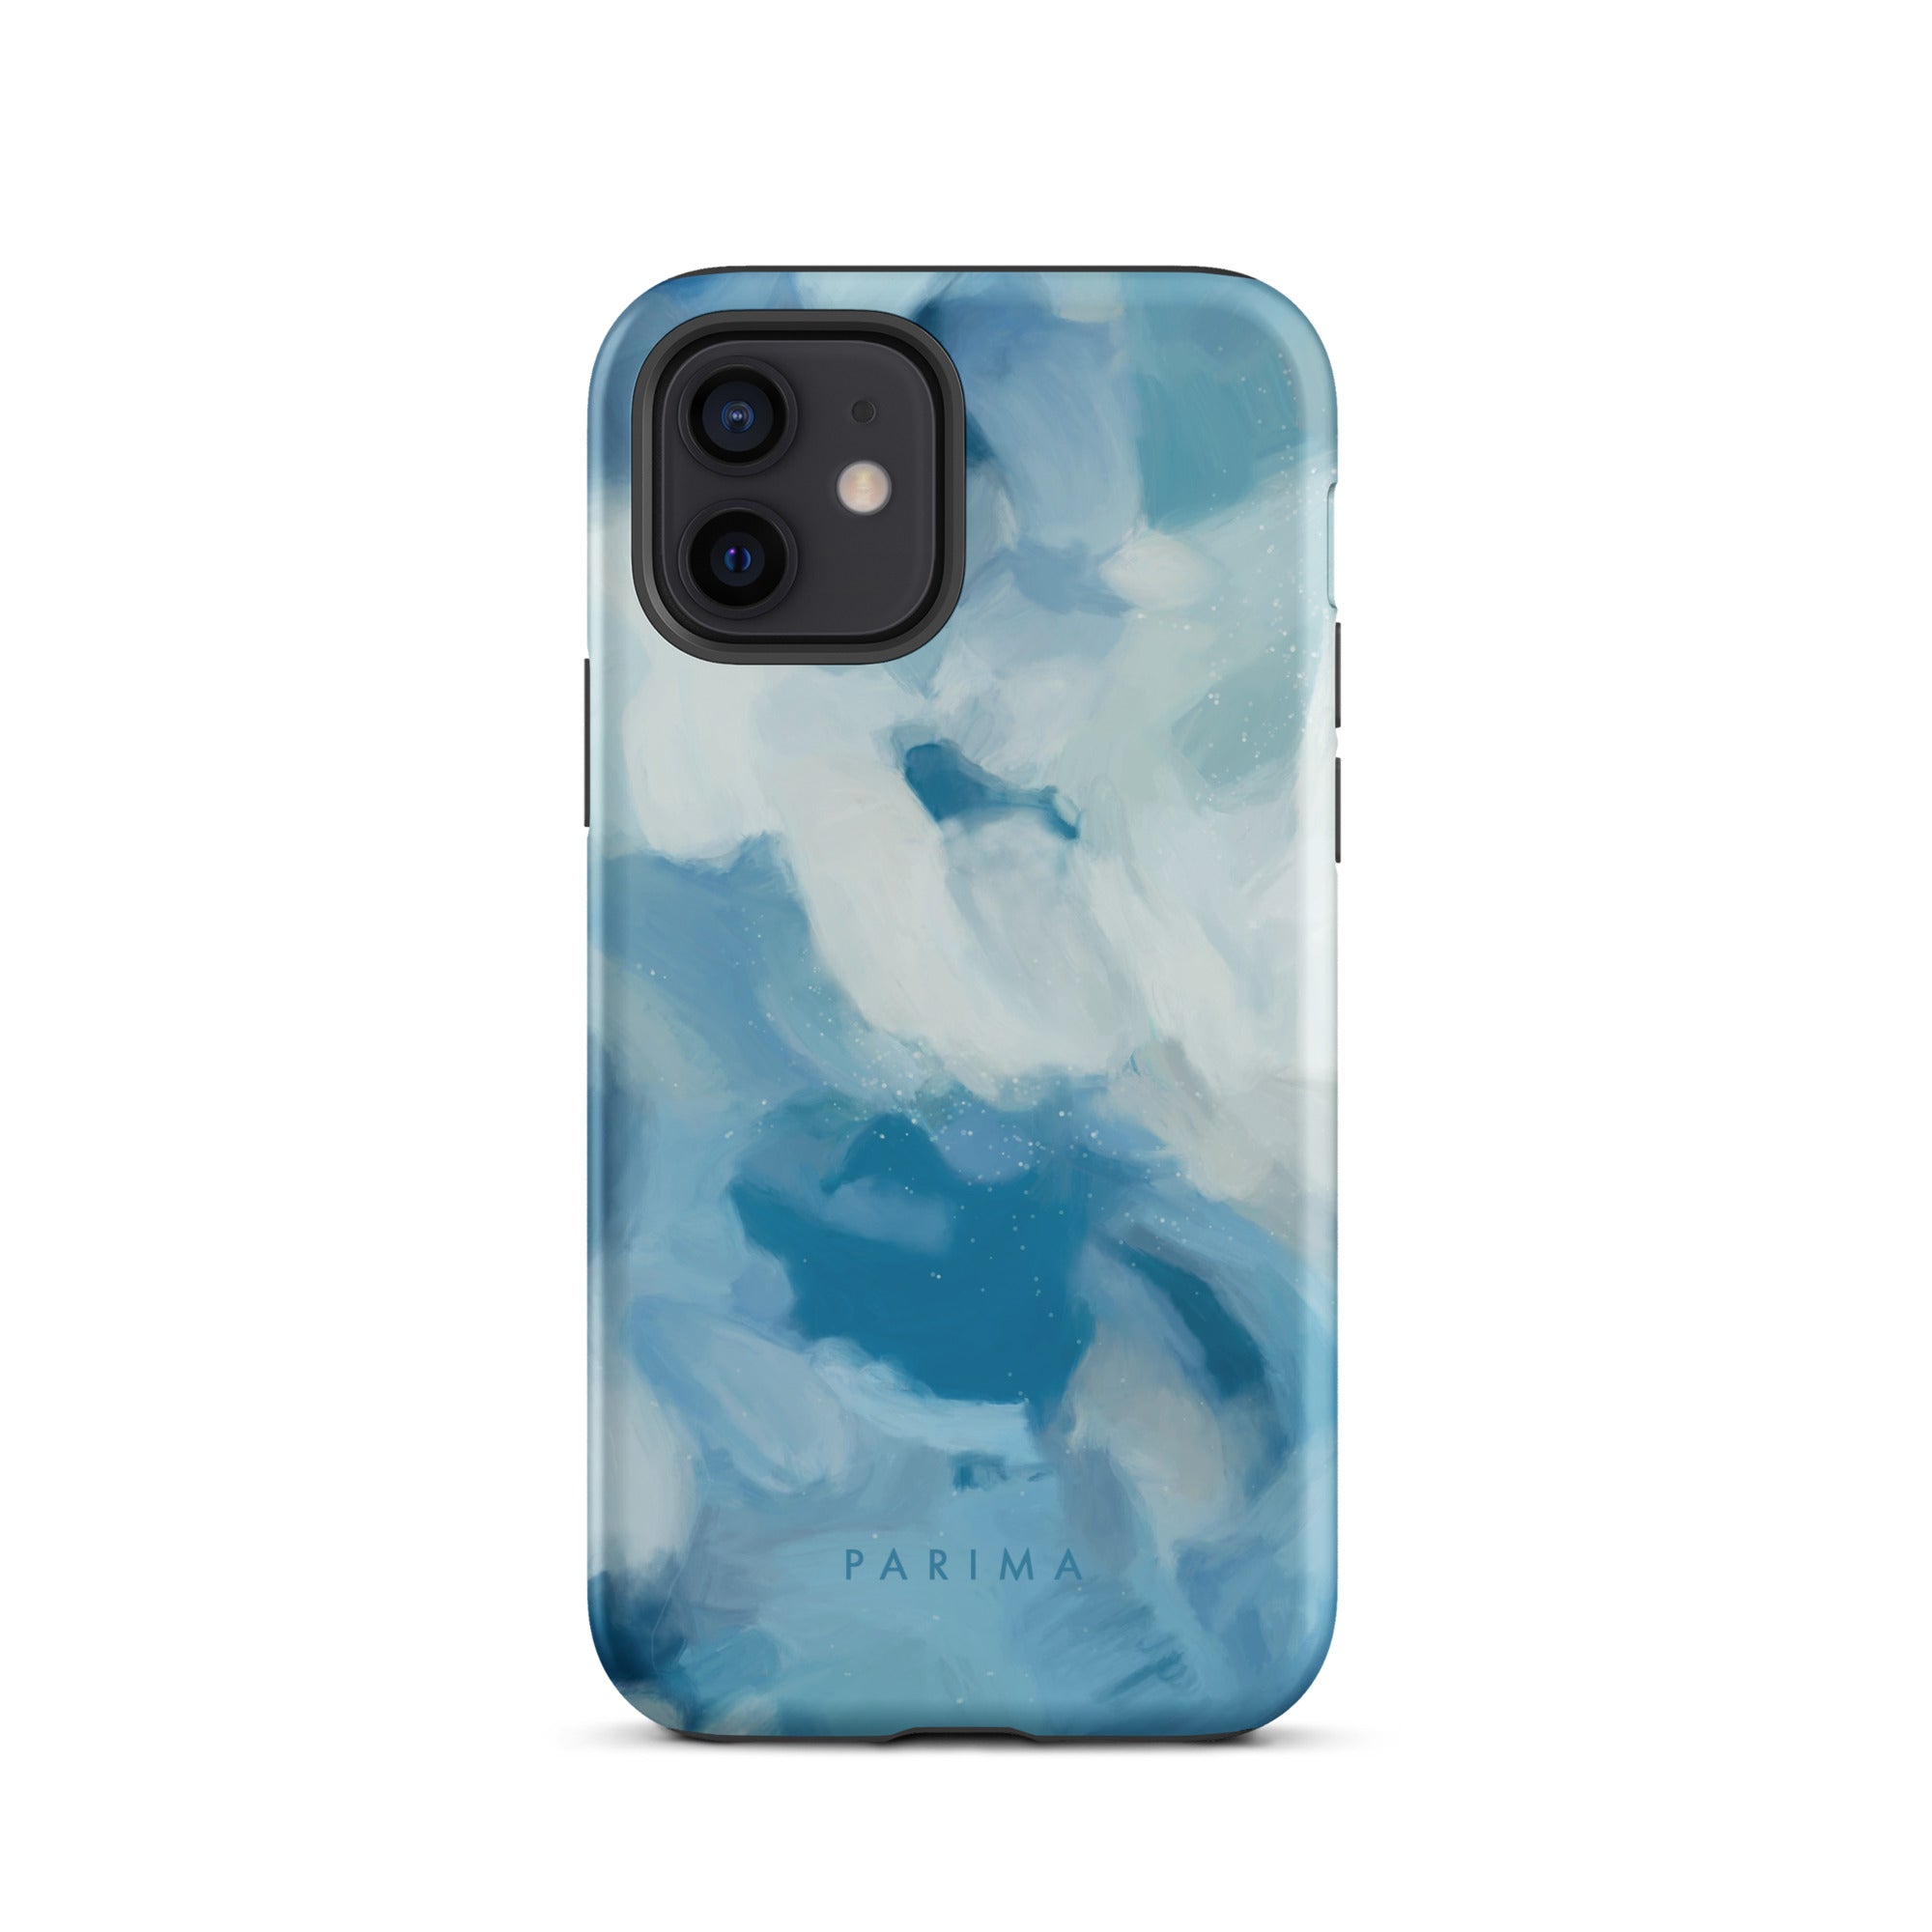 Liviana, blue abstract art - iPhone 12 tough case by Parima Studio